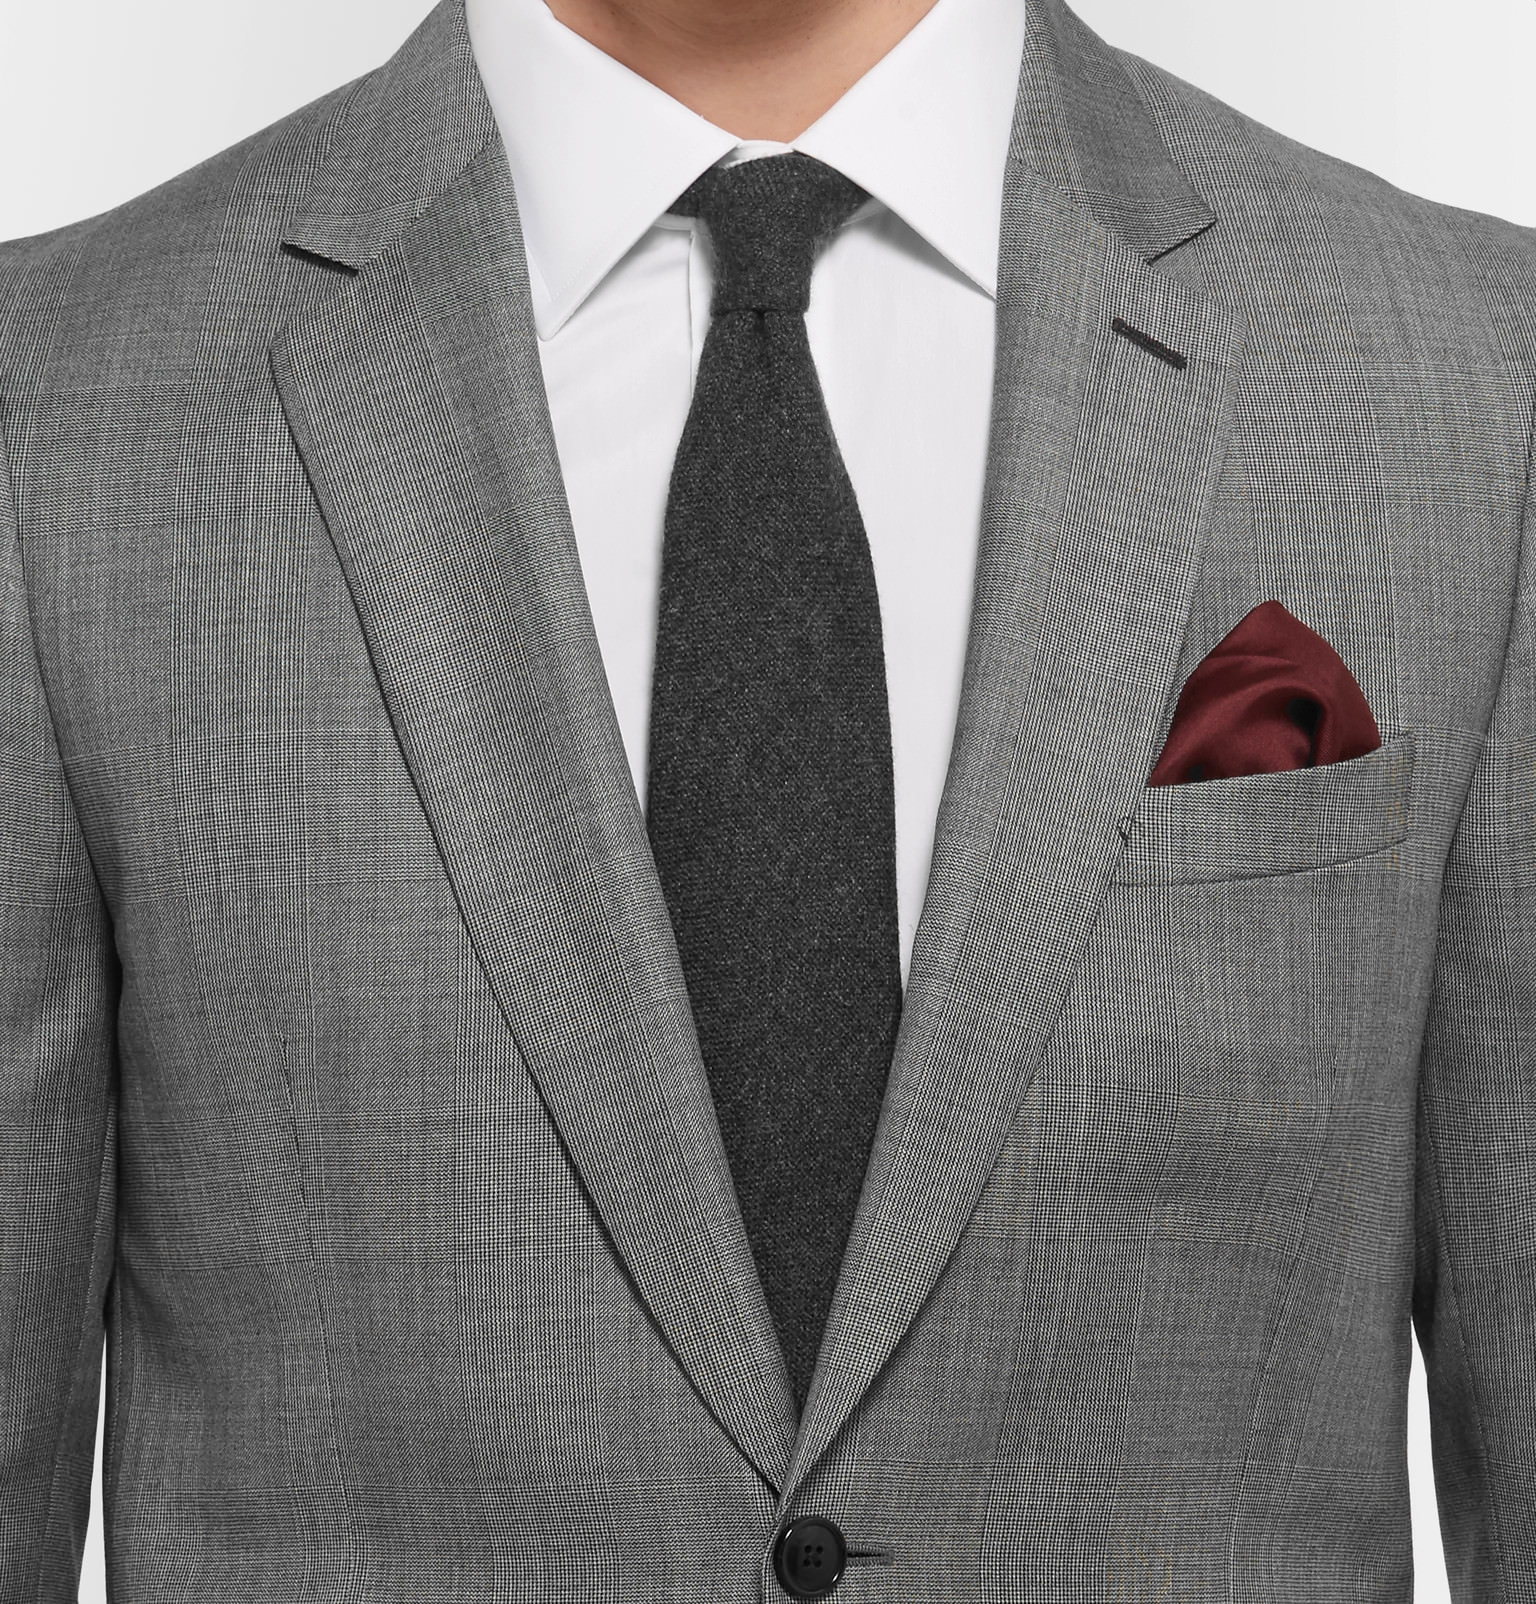 assortir cravate chemise couleur costume gris clair